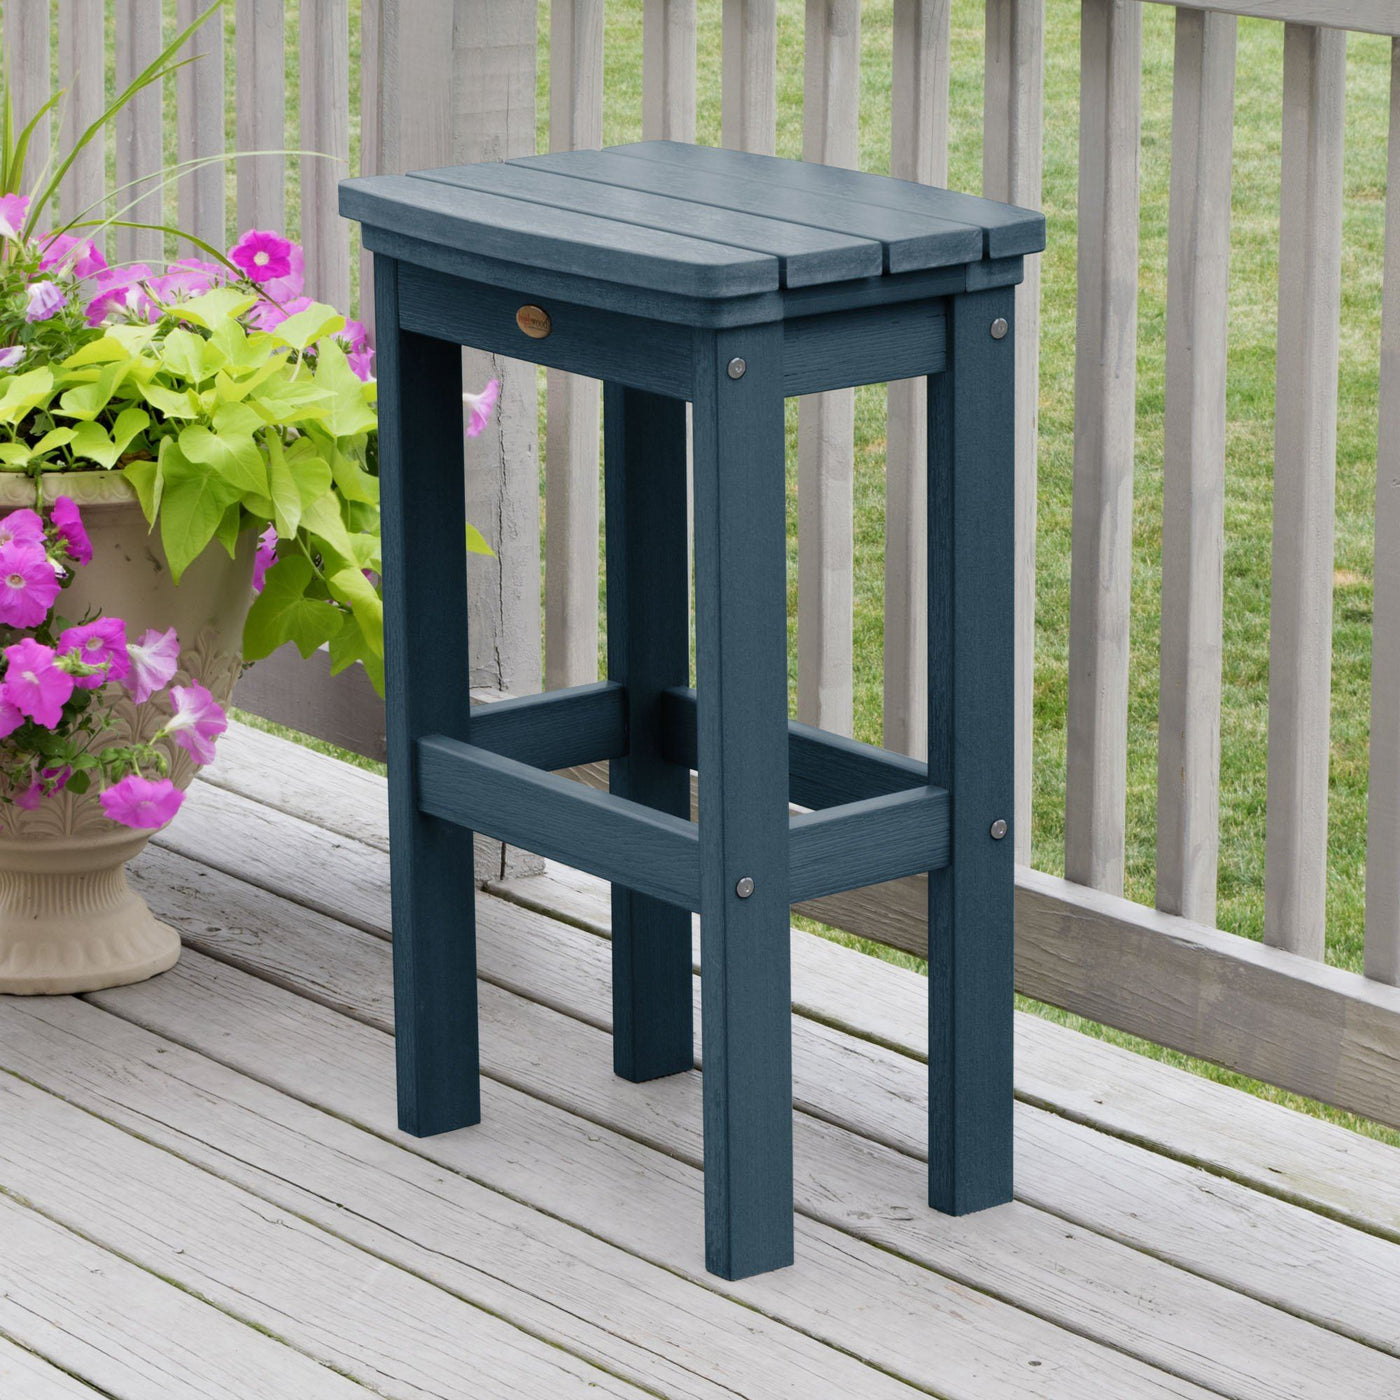 Nantucket Blue Lehigh bar height stool on deck with flowers 